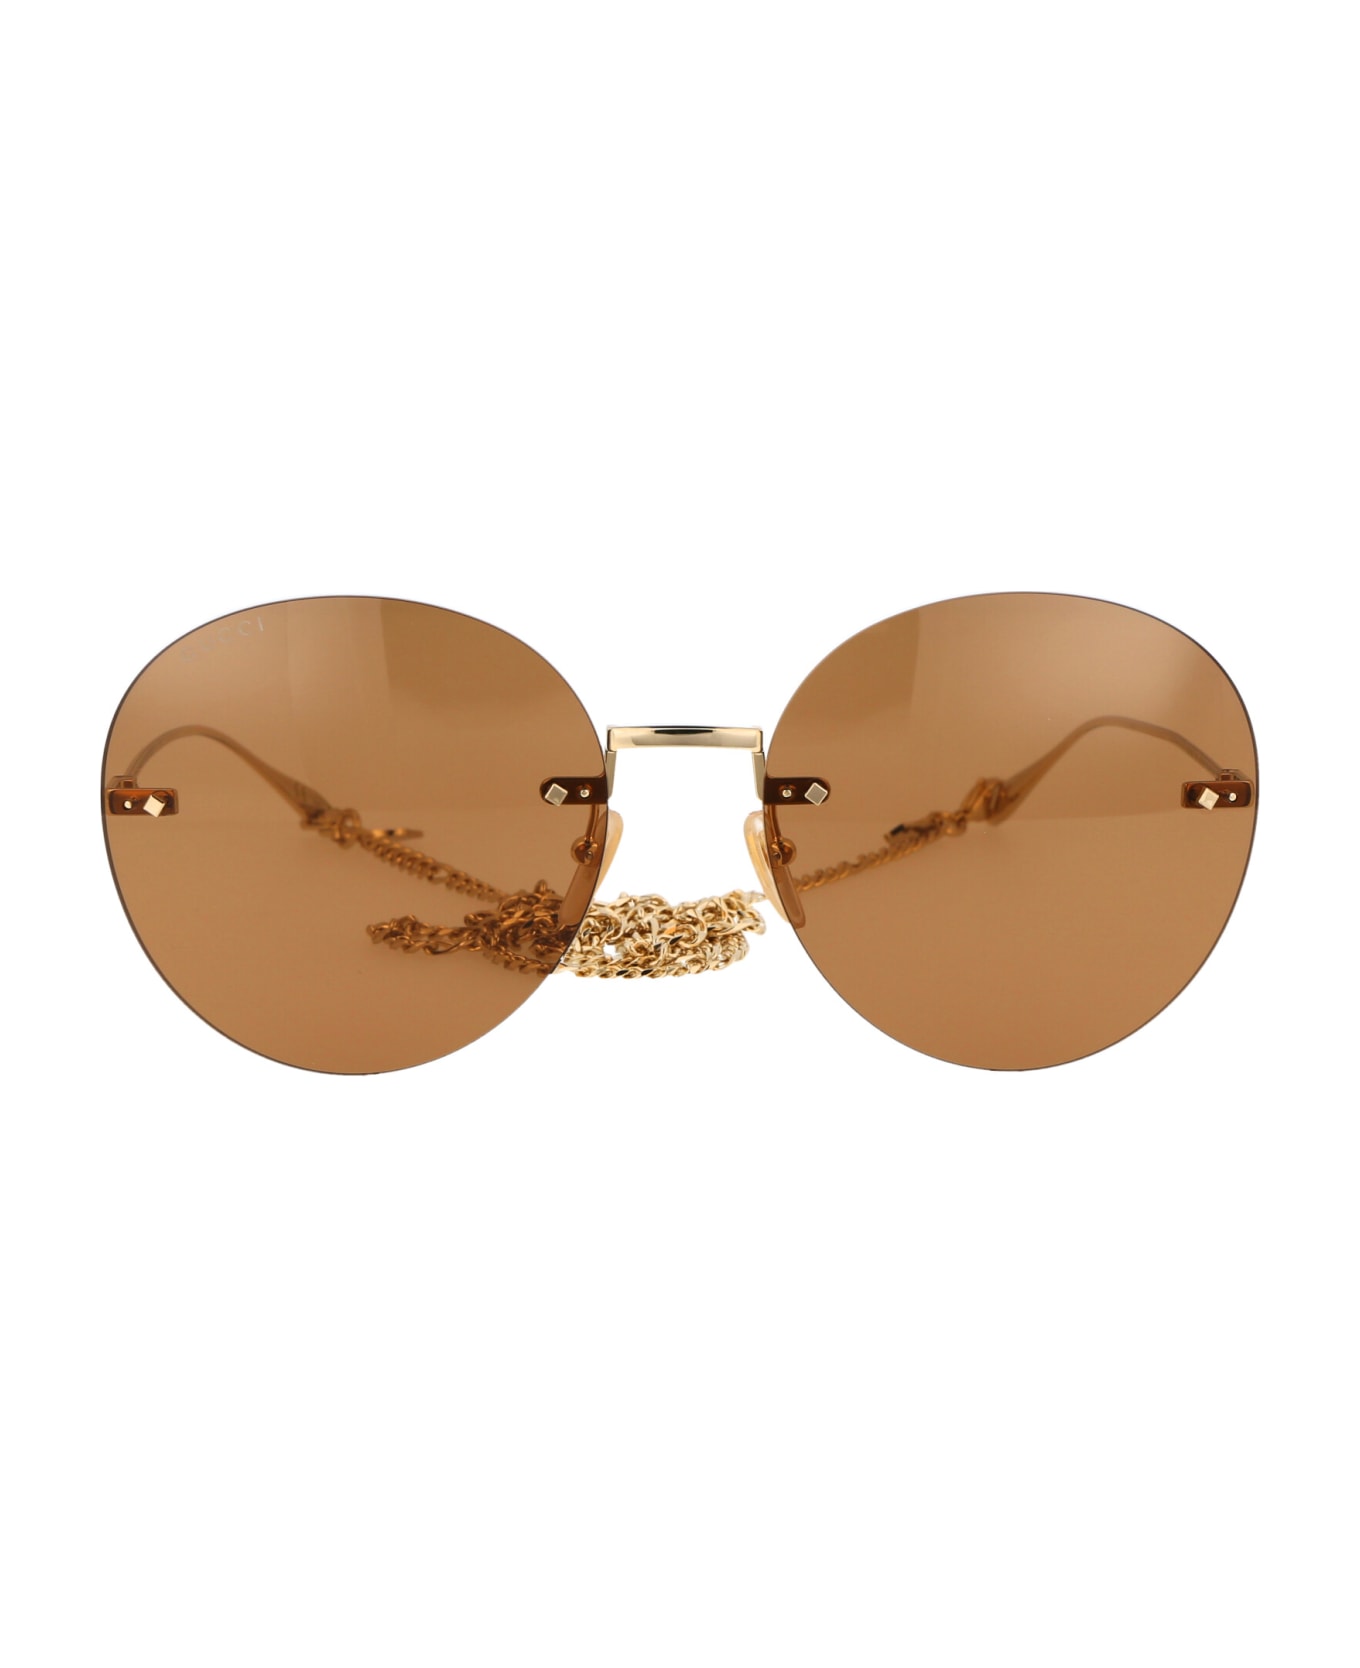 Gucci Eyewear Gg1149s Sunglasses - 003 GOLD GOLD BROWN